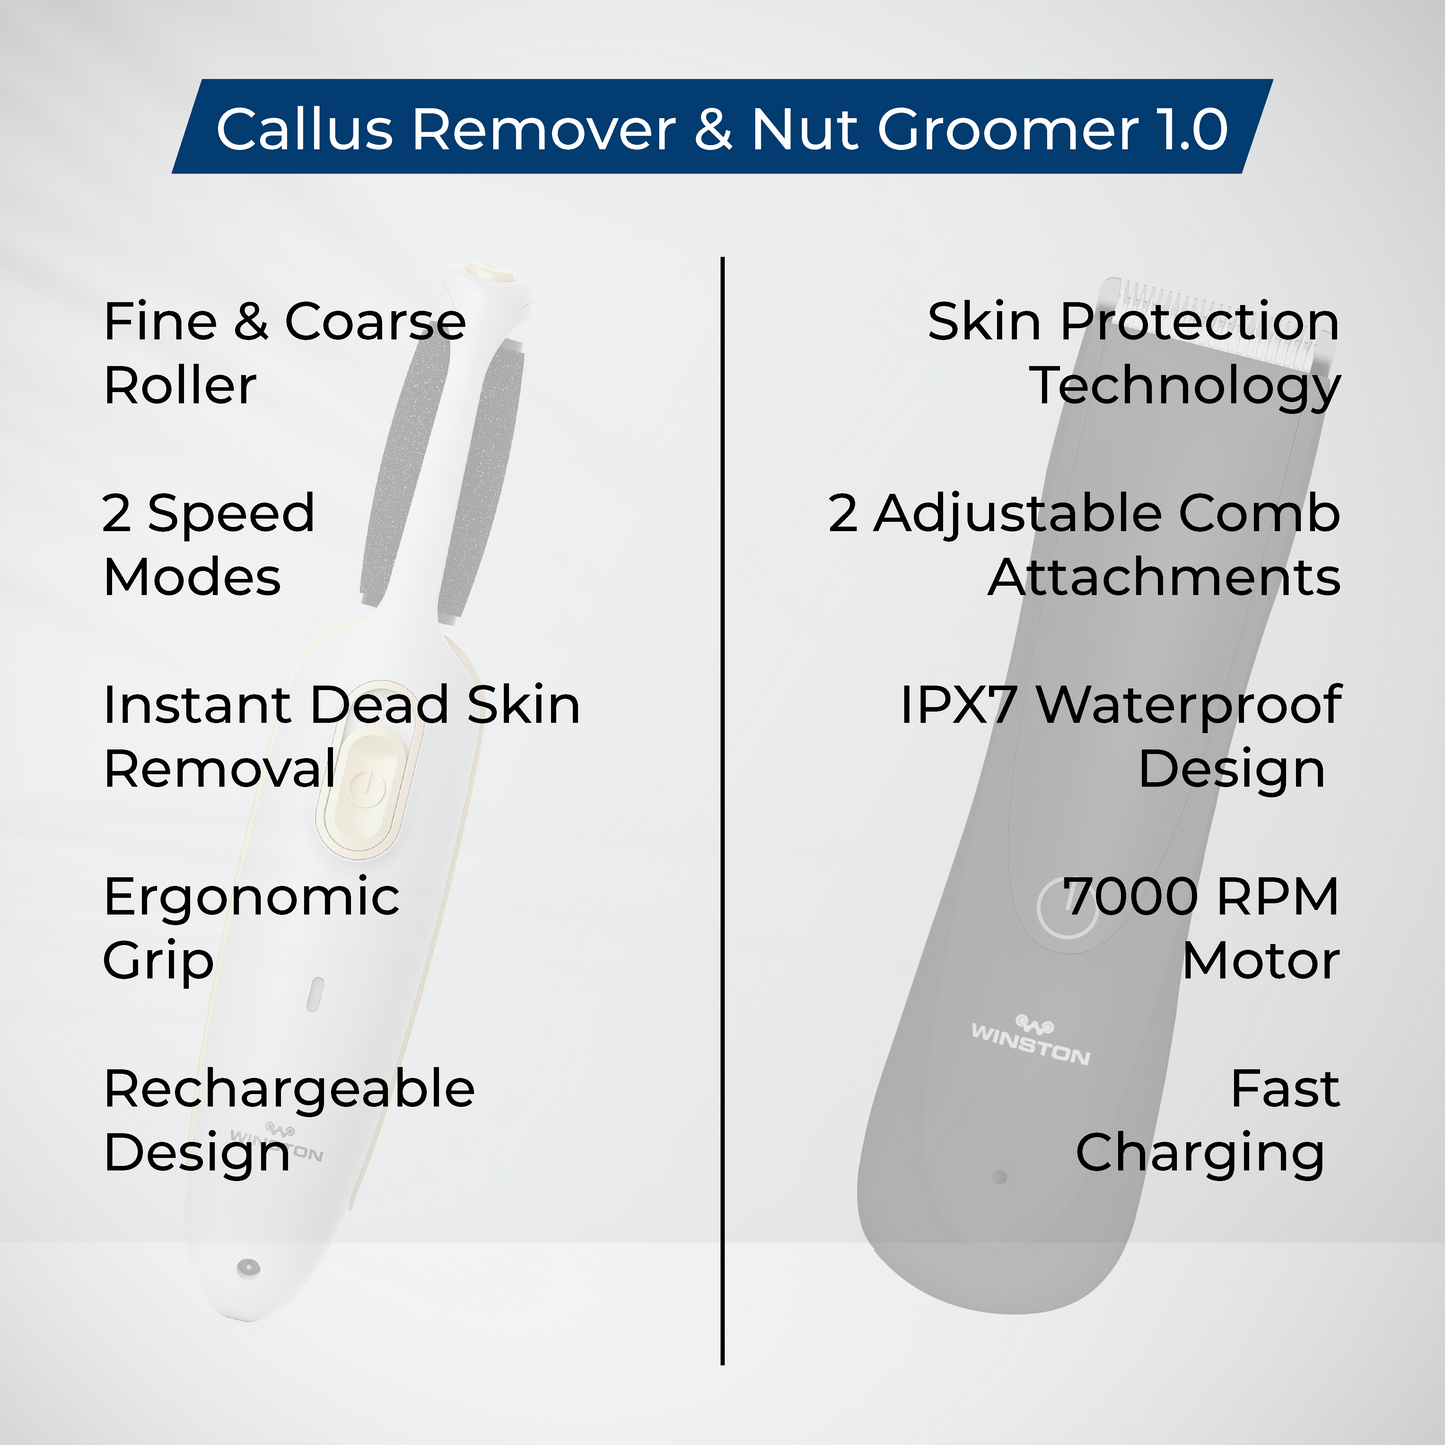 Callus Remover & Nut Groomer 1.0 Combo